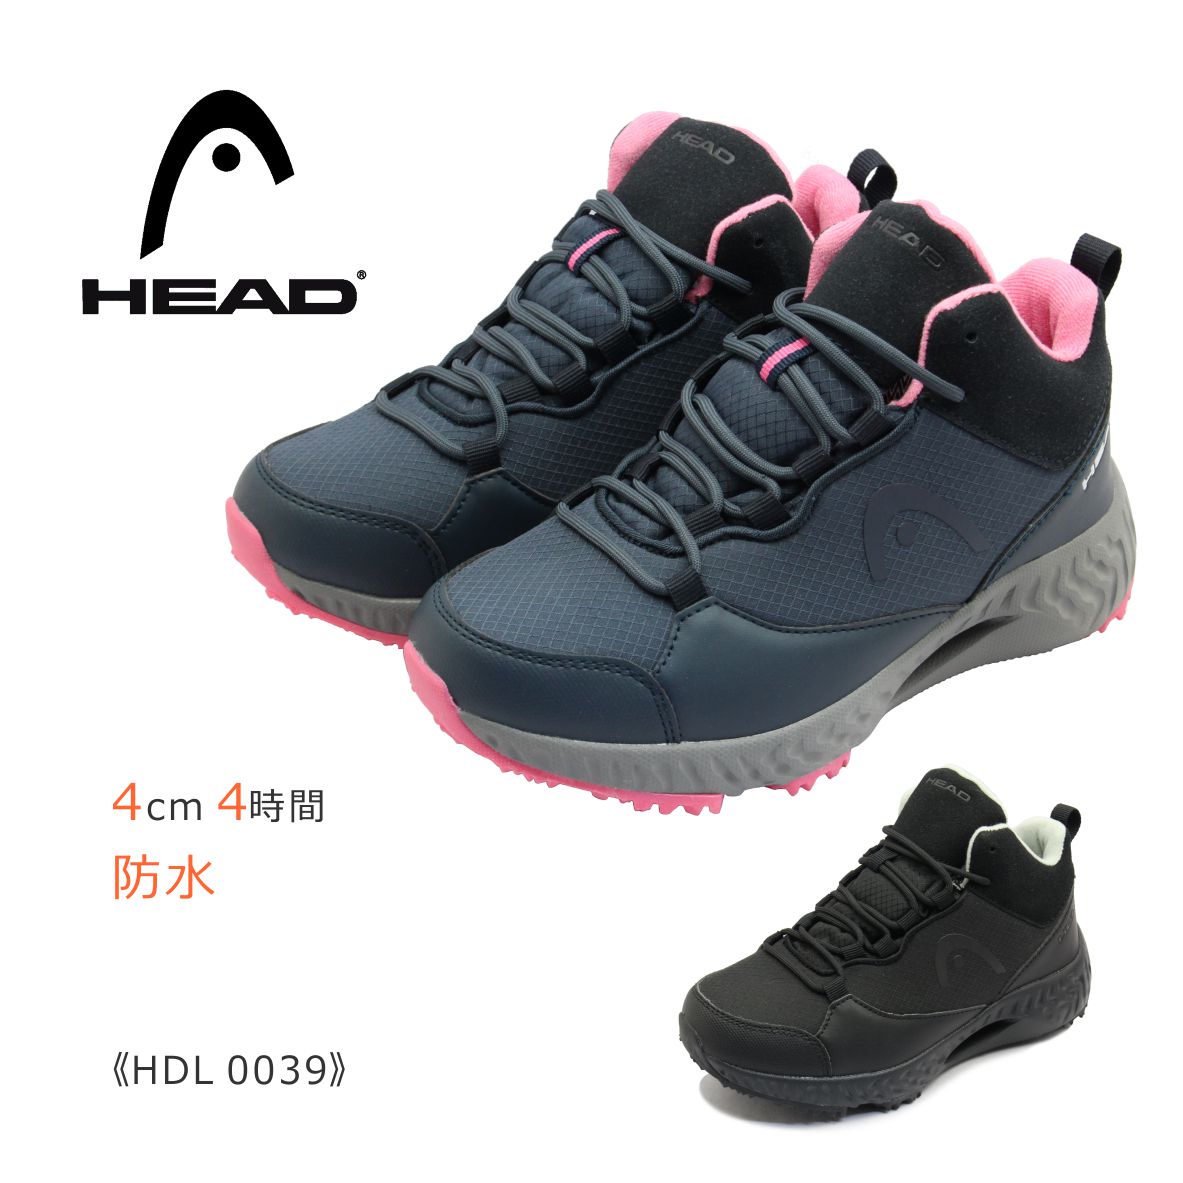 HEAD ヘッド レディース スノー ブーツ HDL 0039 3E 軽量 防水 防滑 靴 黒 紺 ブラック ネイビー ピンク